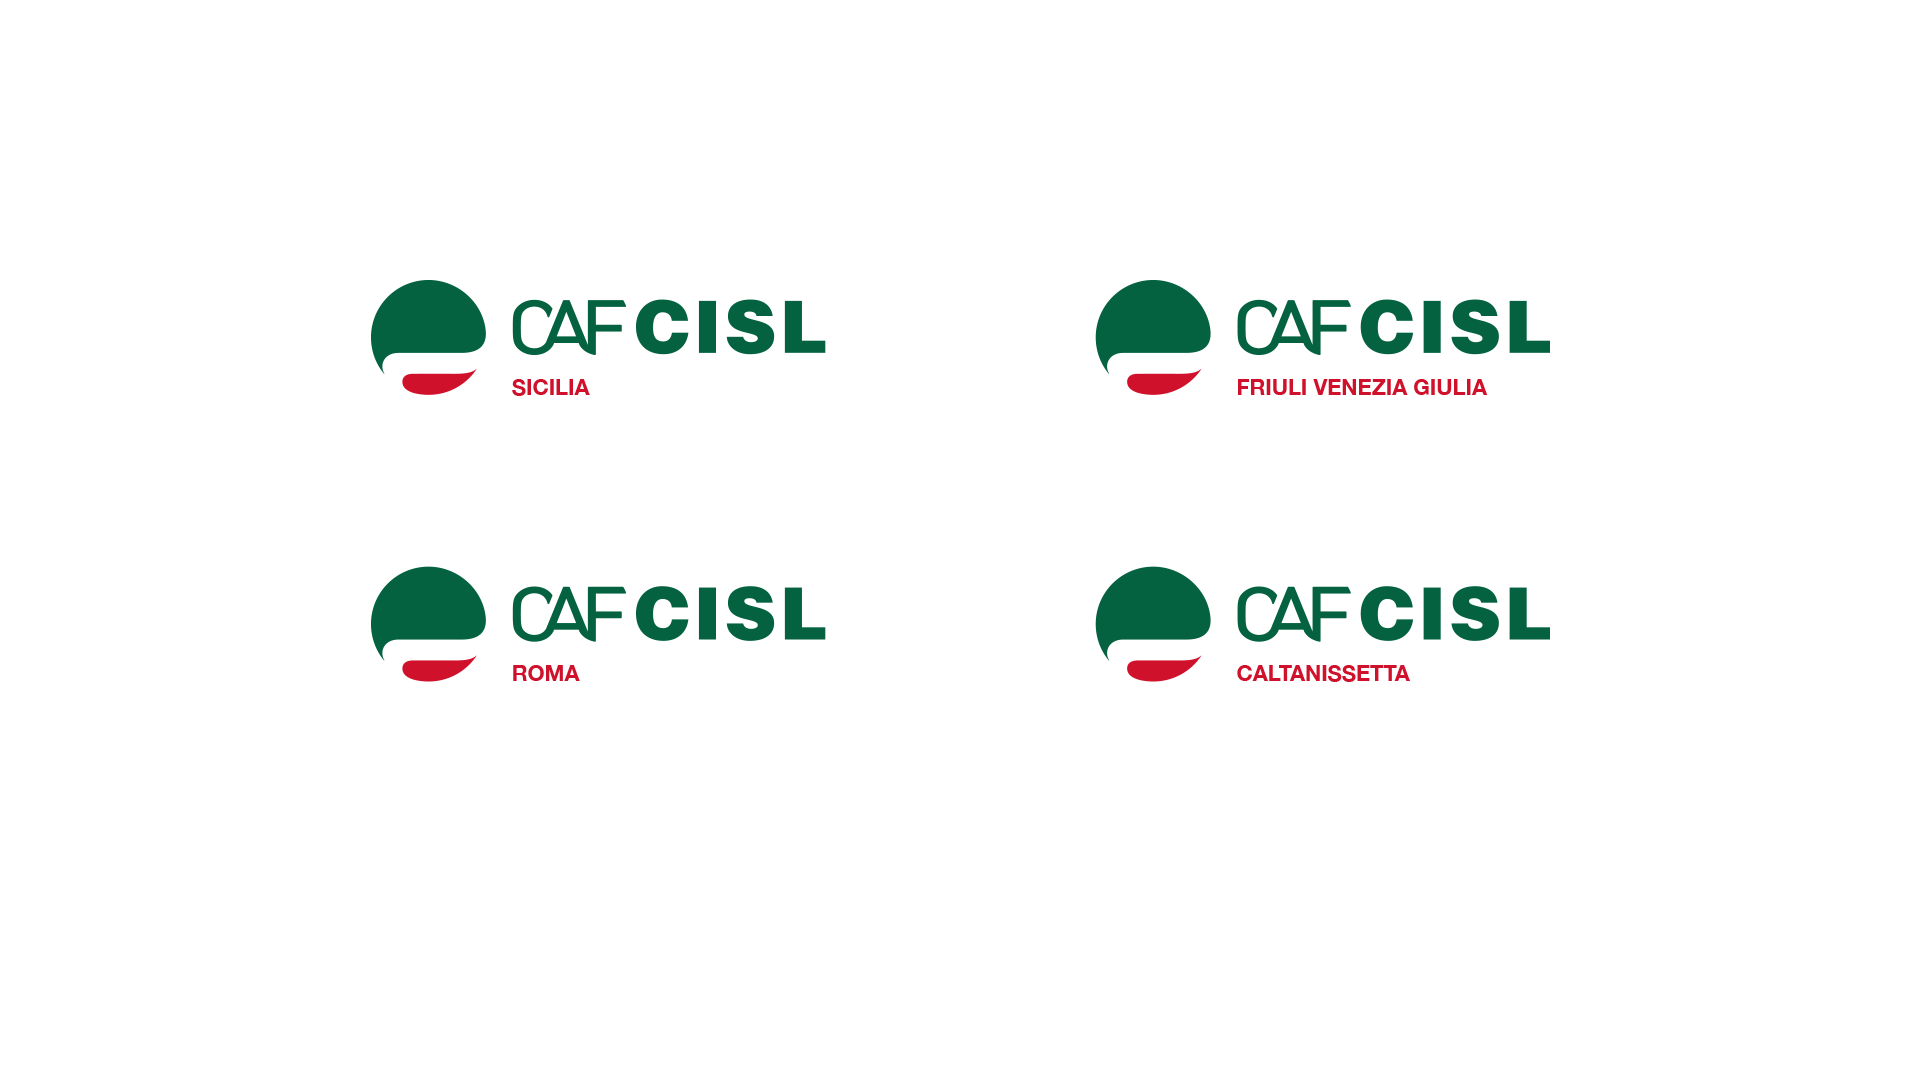 caf-cisl rebranding ego55